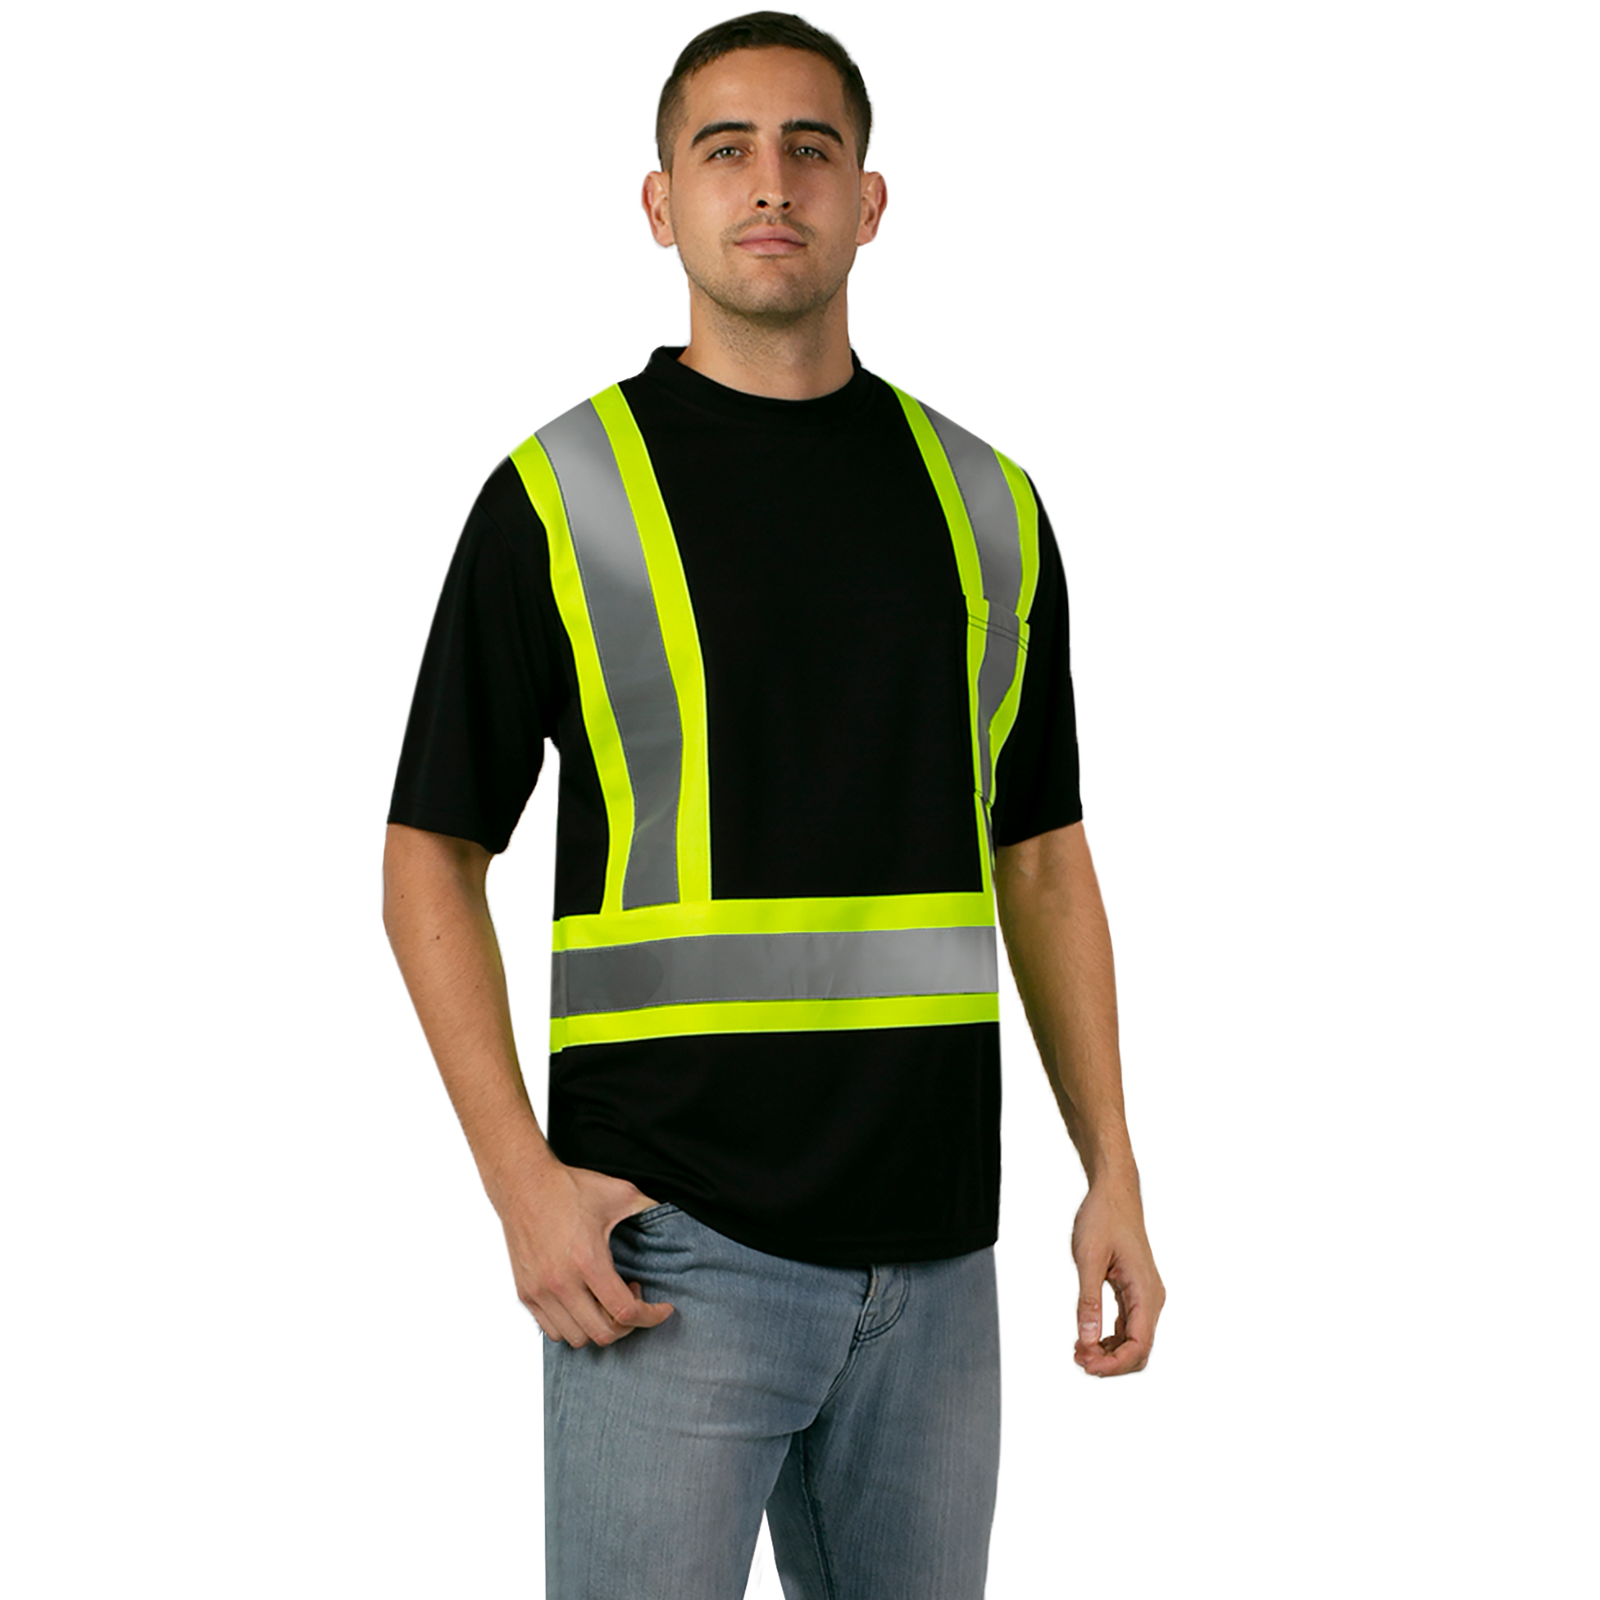 A man wearing the hi-vis JORESTECH reflective two tone safety shirt